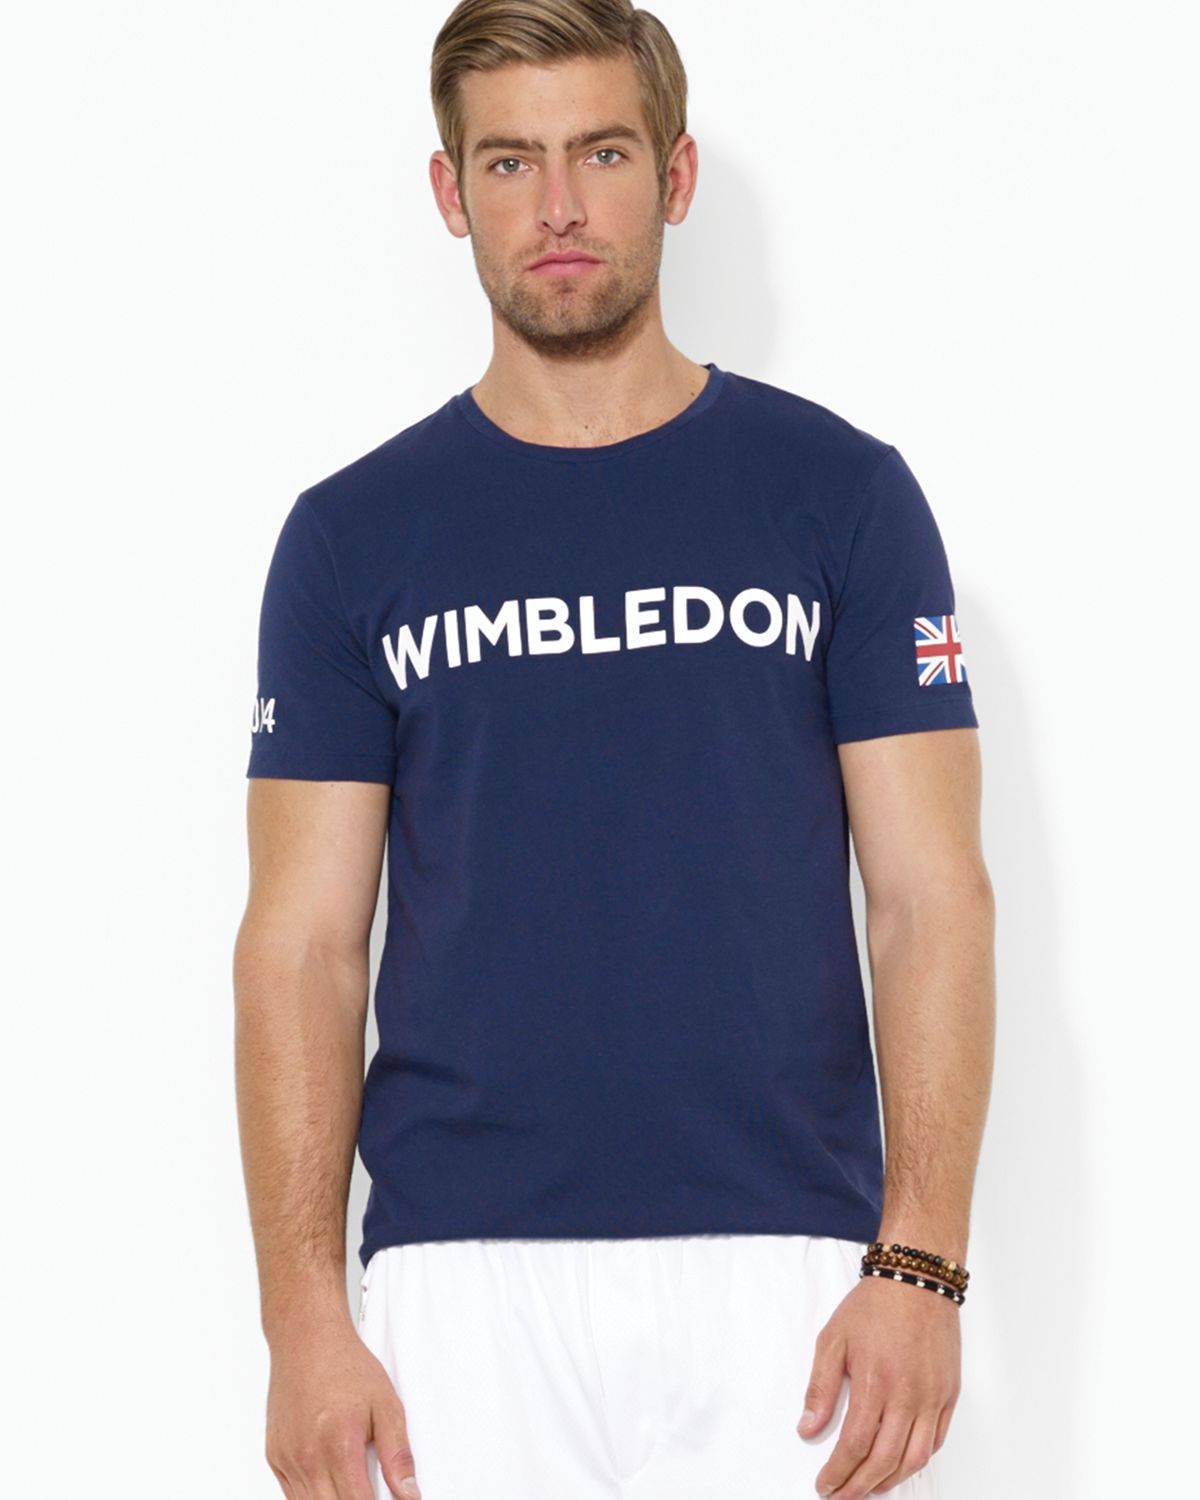 Ralph Lauren Polo Wimbledon Customfit Crewneck Tshirt in Blue for Men